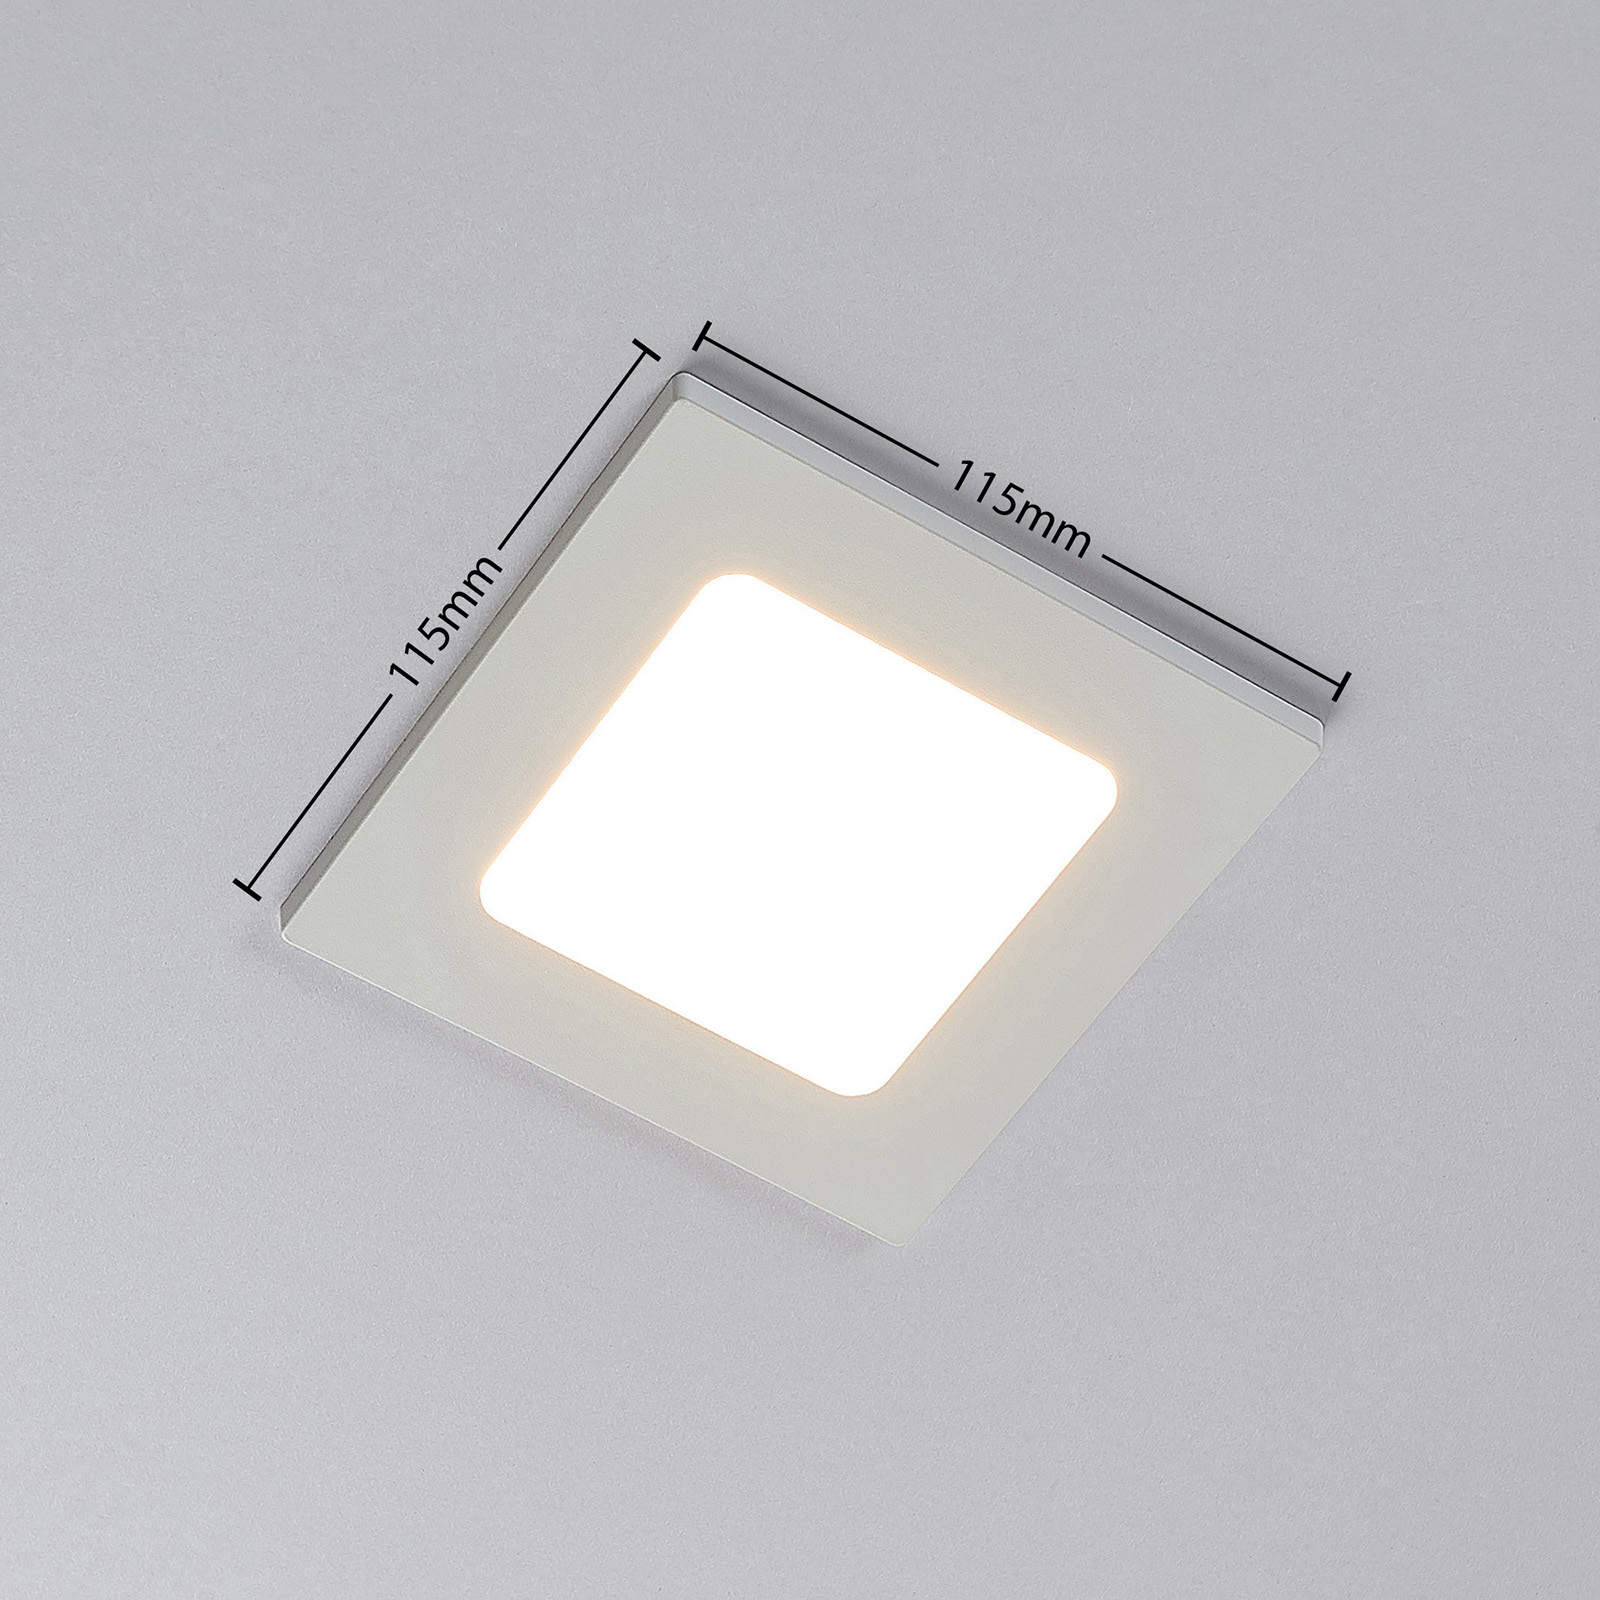 Joki LED downlight white 3000 K angular 11.5 cm